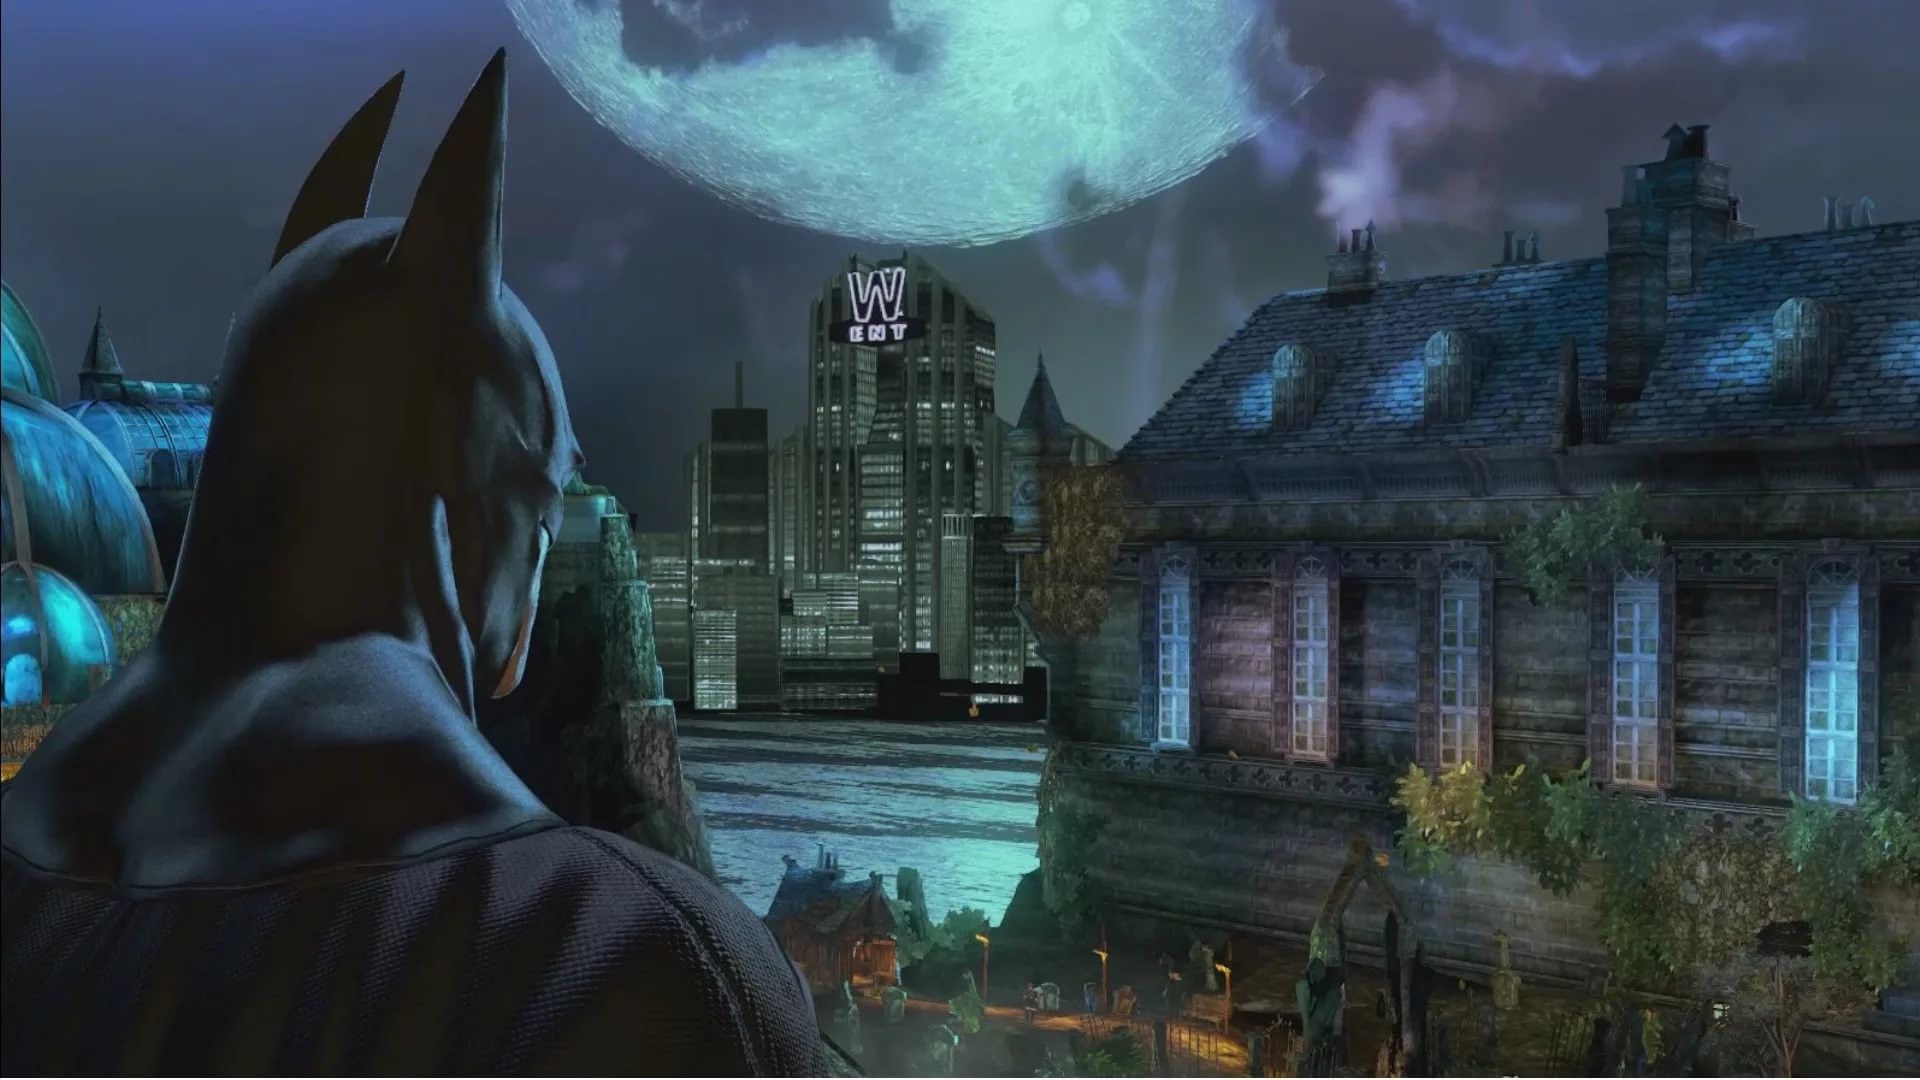 Batman in Batman: Arkham Asylum wallpaper - Game wallpapers - #54400